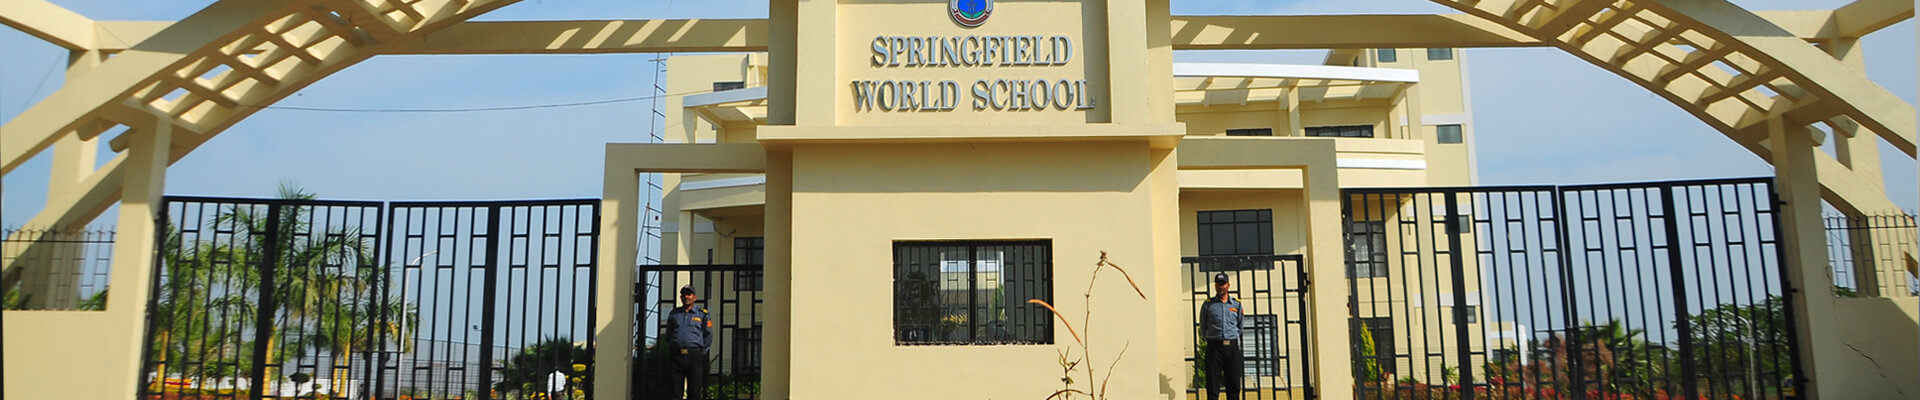 Springfield World School